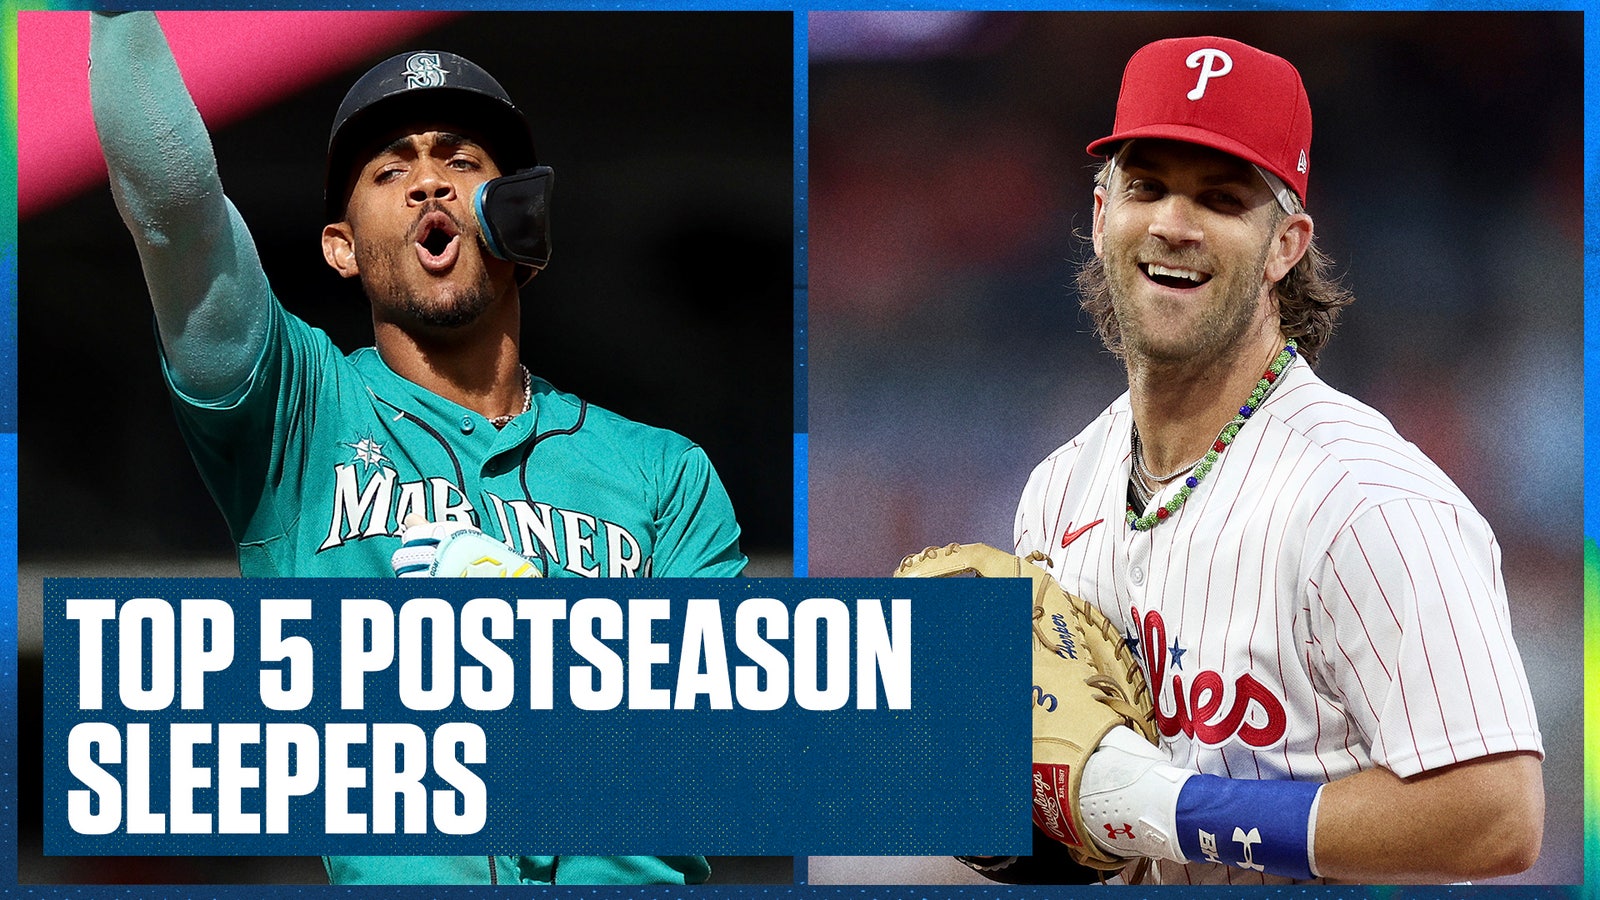 Mariners & Phillies highlight the Top 5 Postseason Sleepers